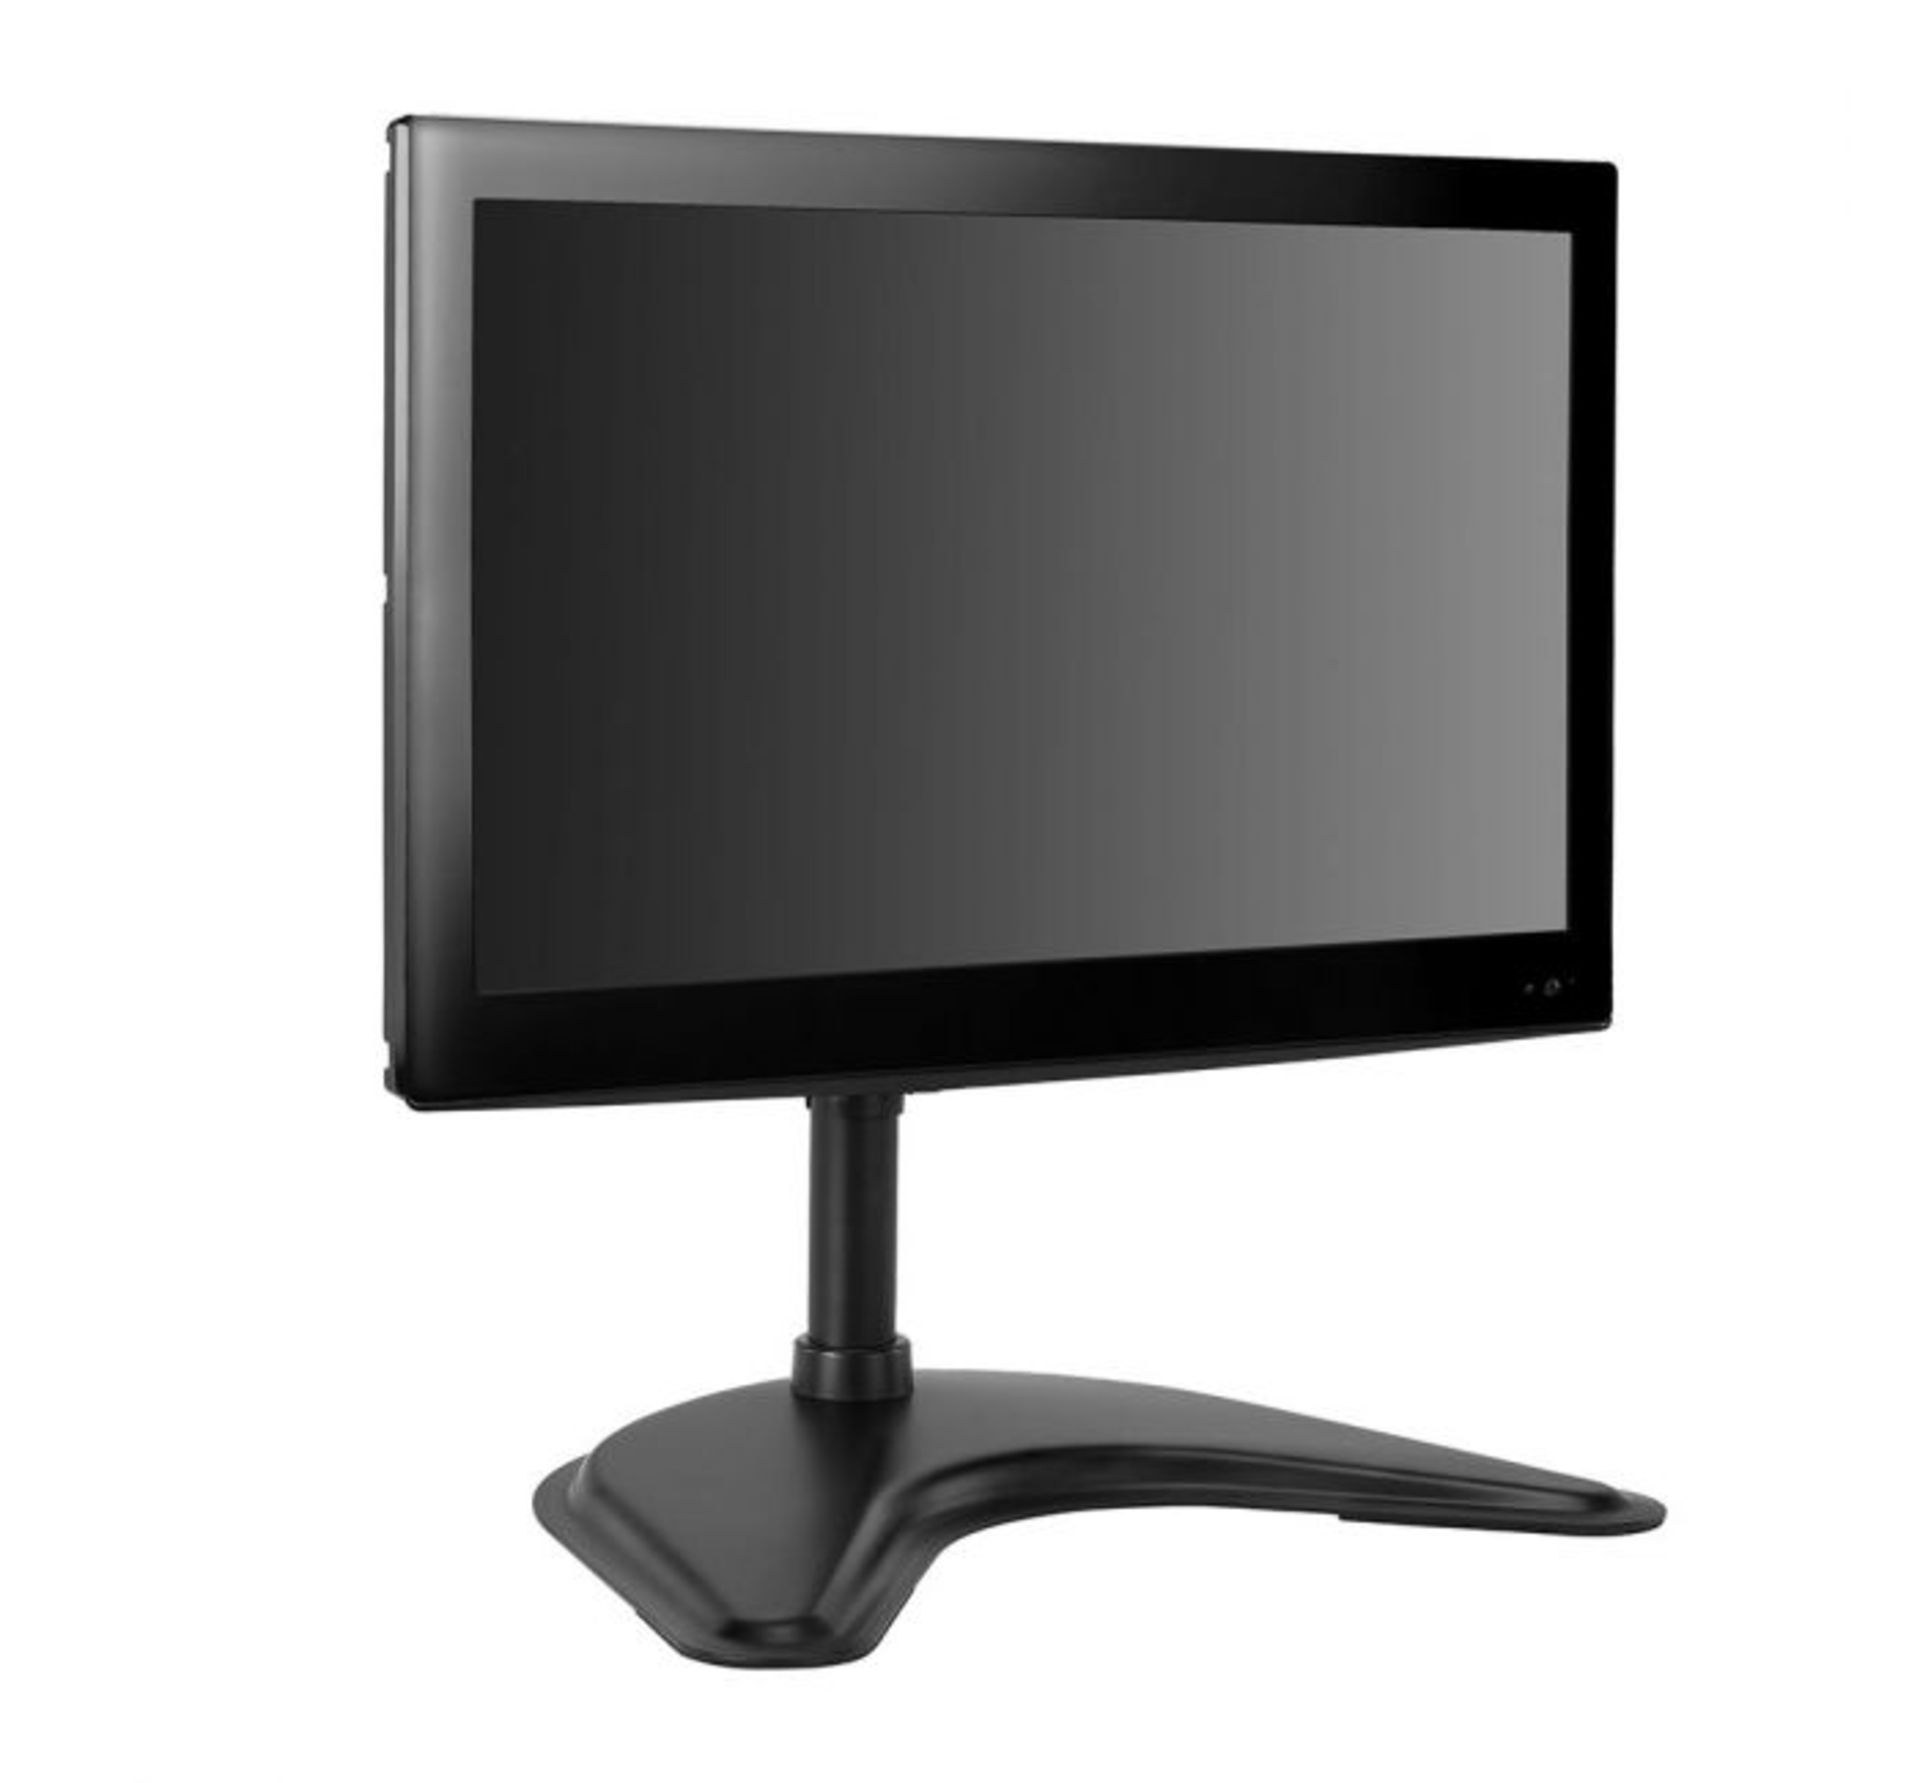 (AP74) Single Monitor Desk Mount Heavy duty single monitor mount - maximum weight capacity 10k... - Image 3 of 3